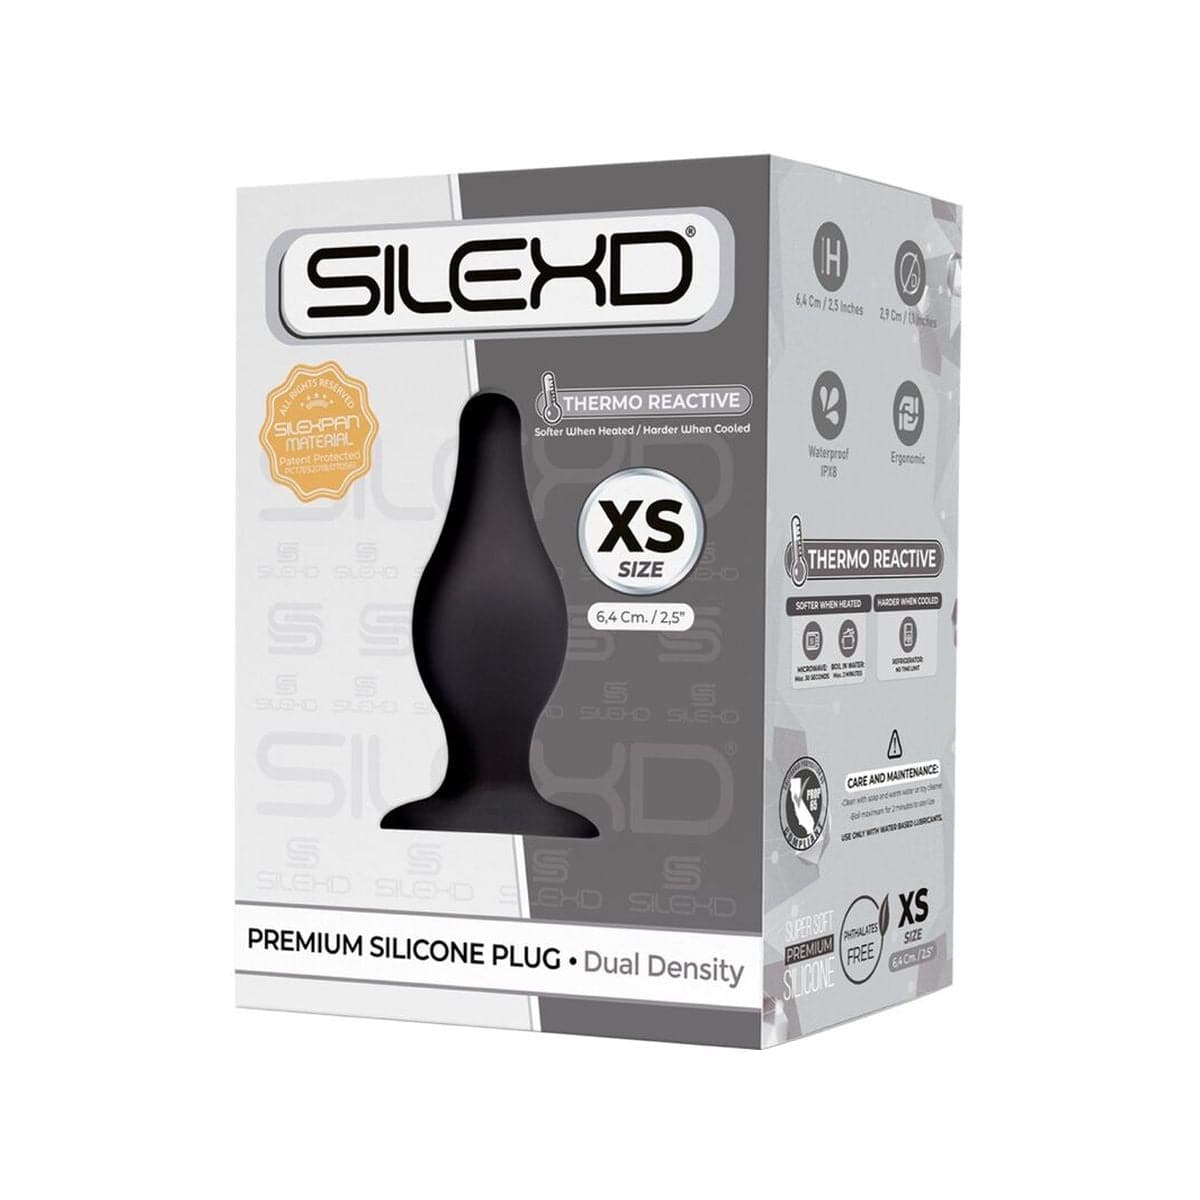 Plug Anal Silexd 2 Premium Silicone XS, 6.4cm Ø2.9cm